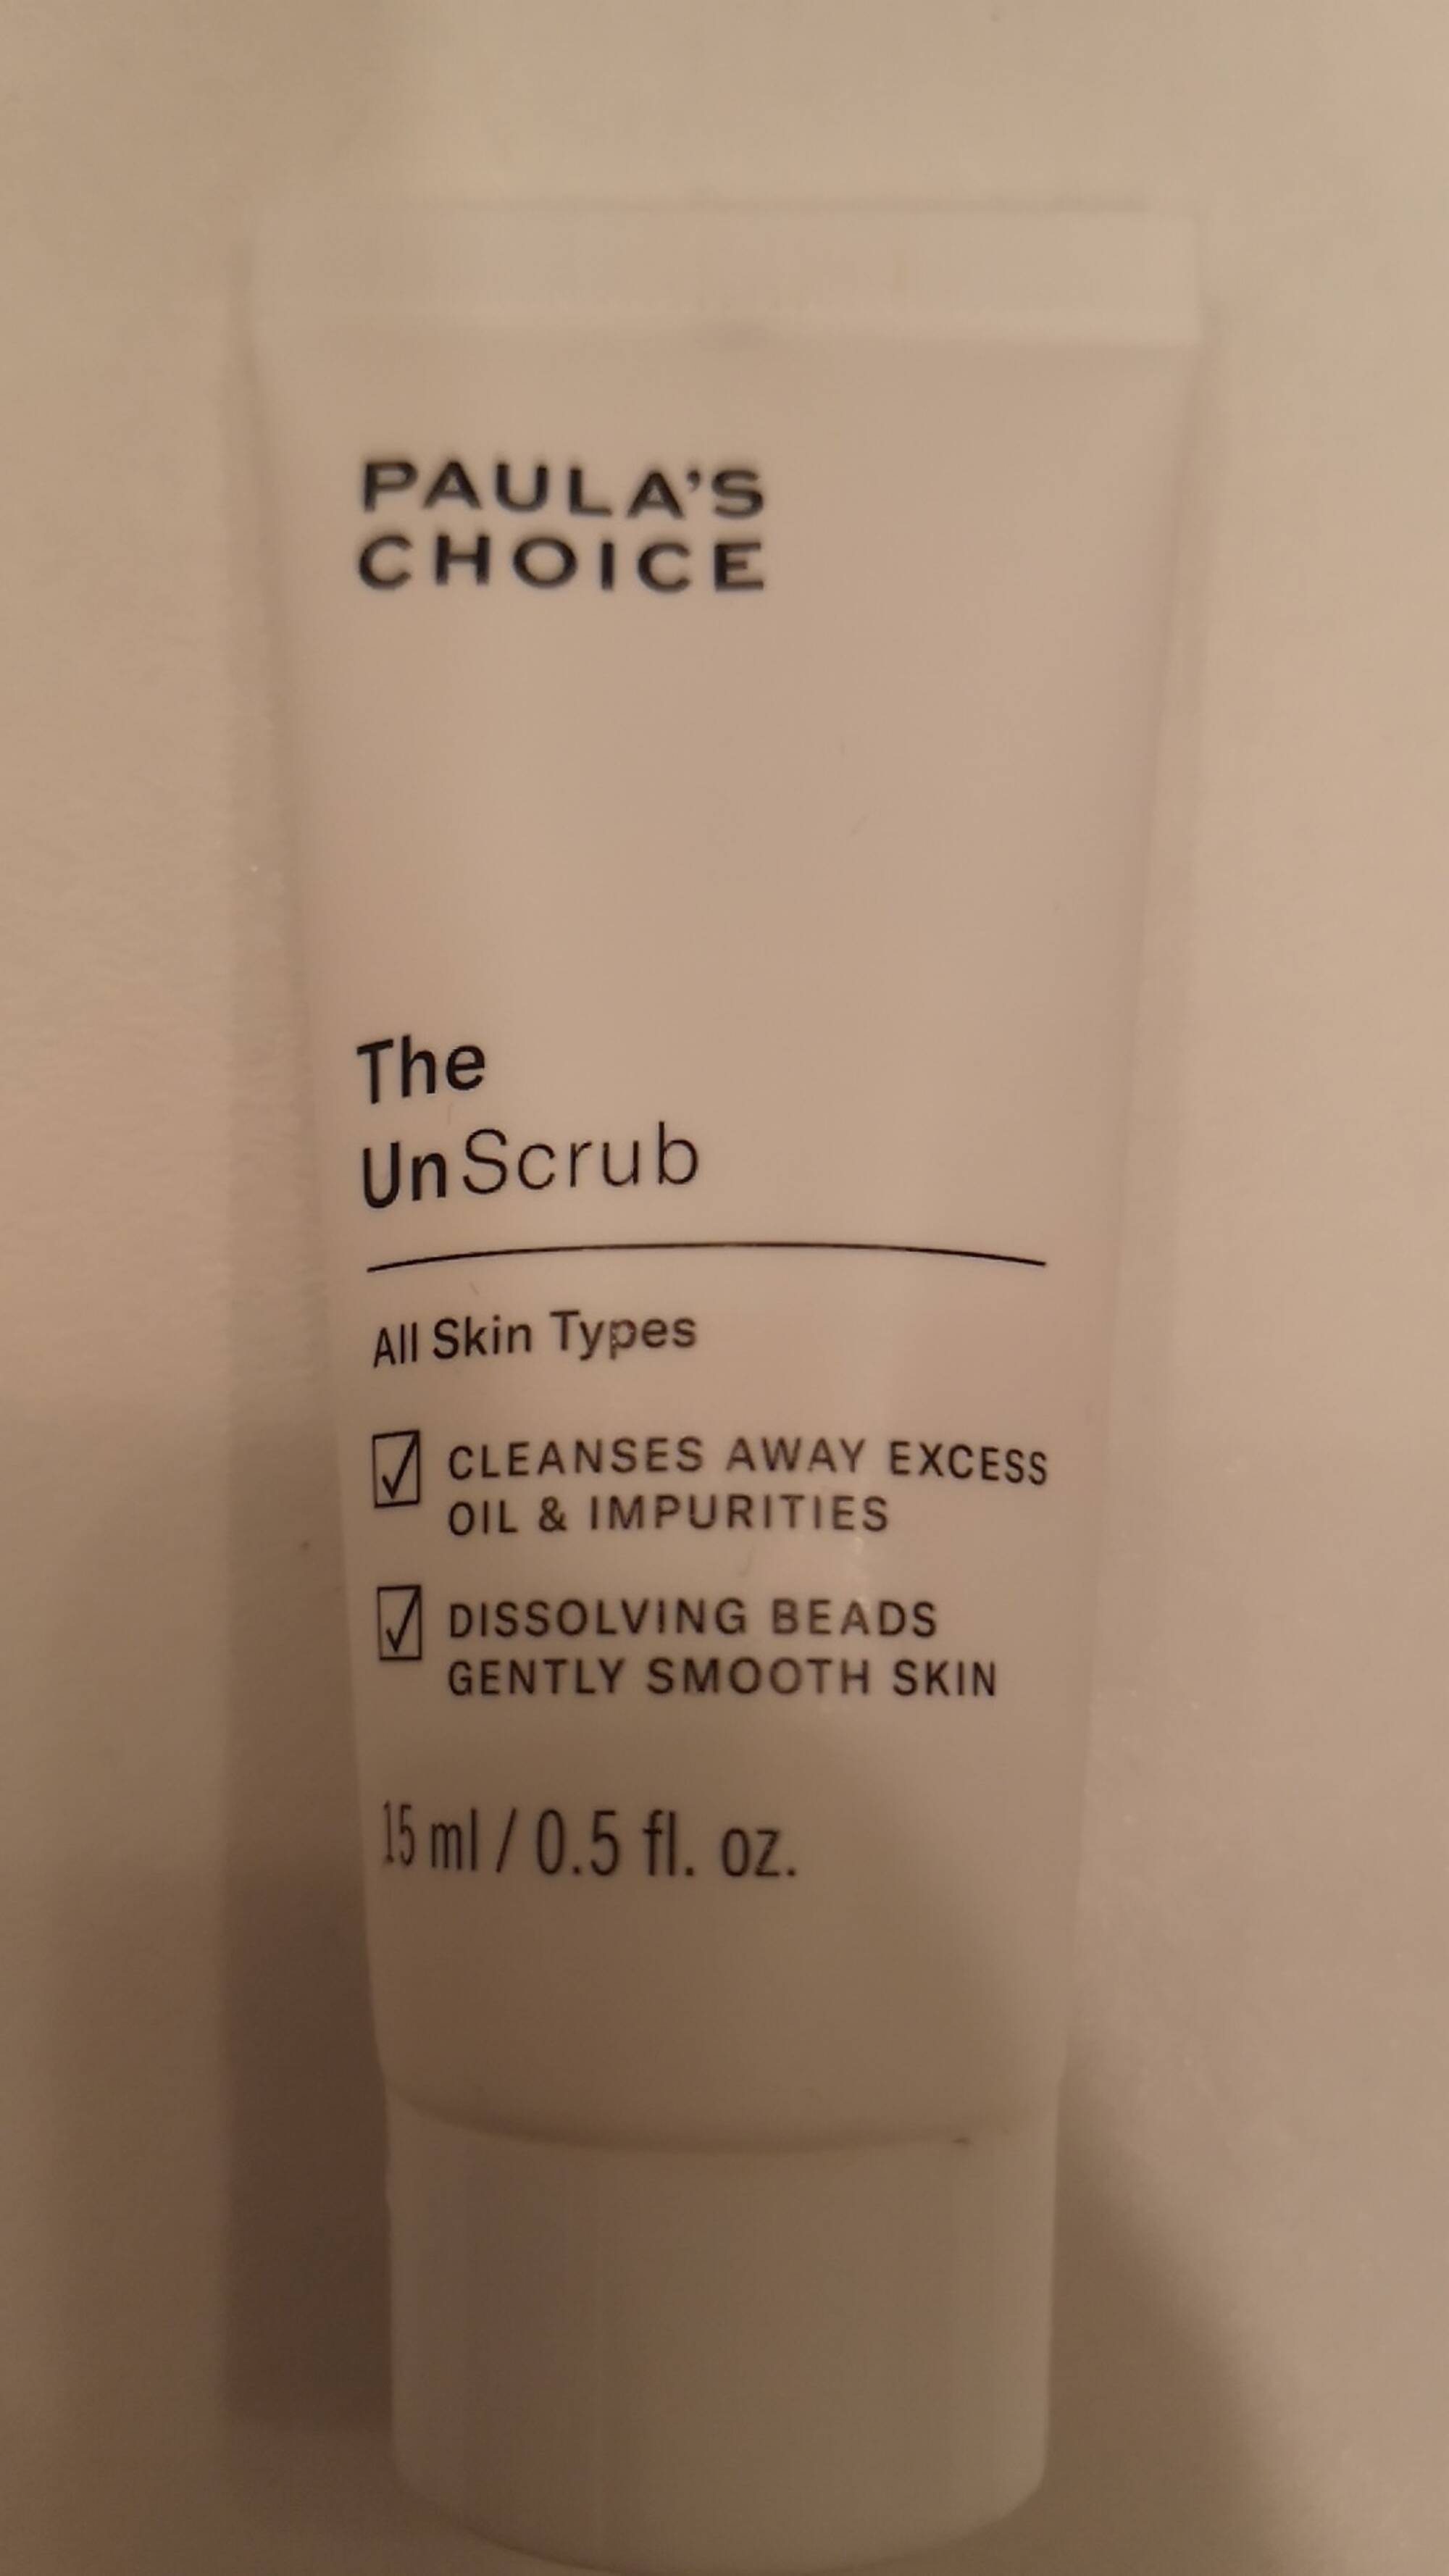 PAULA'S CHOICE - The unscrub - All skin types